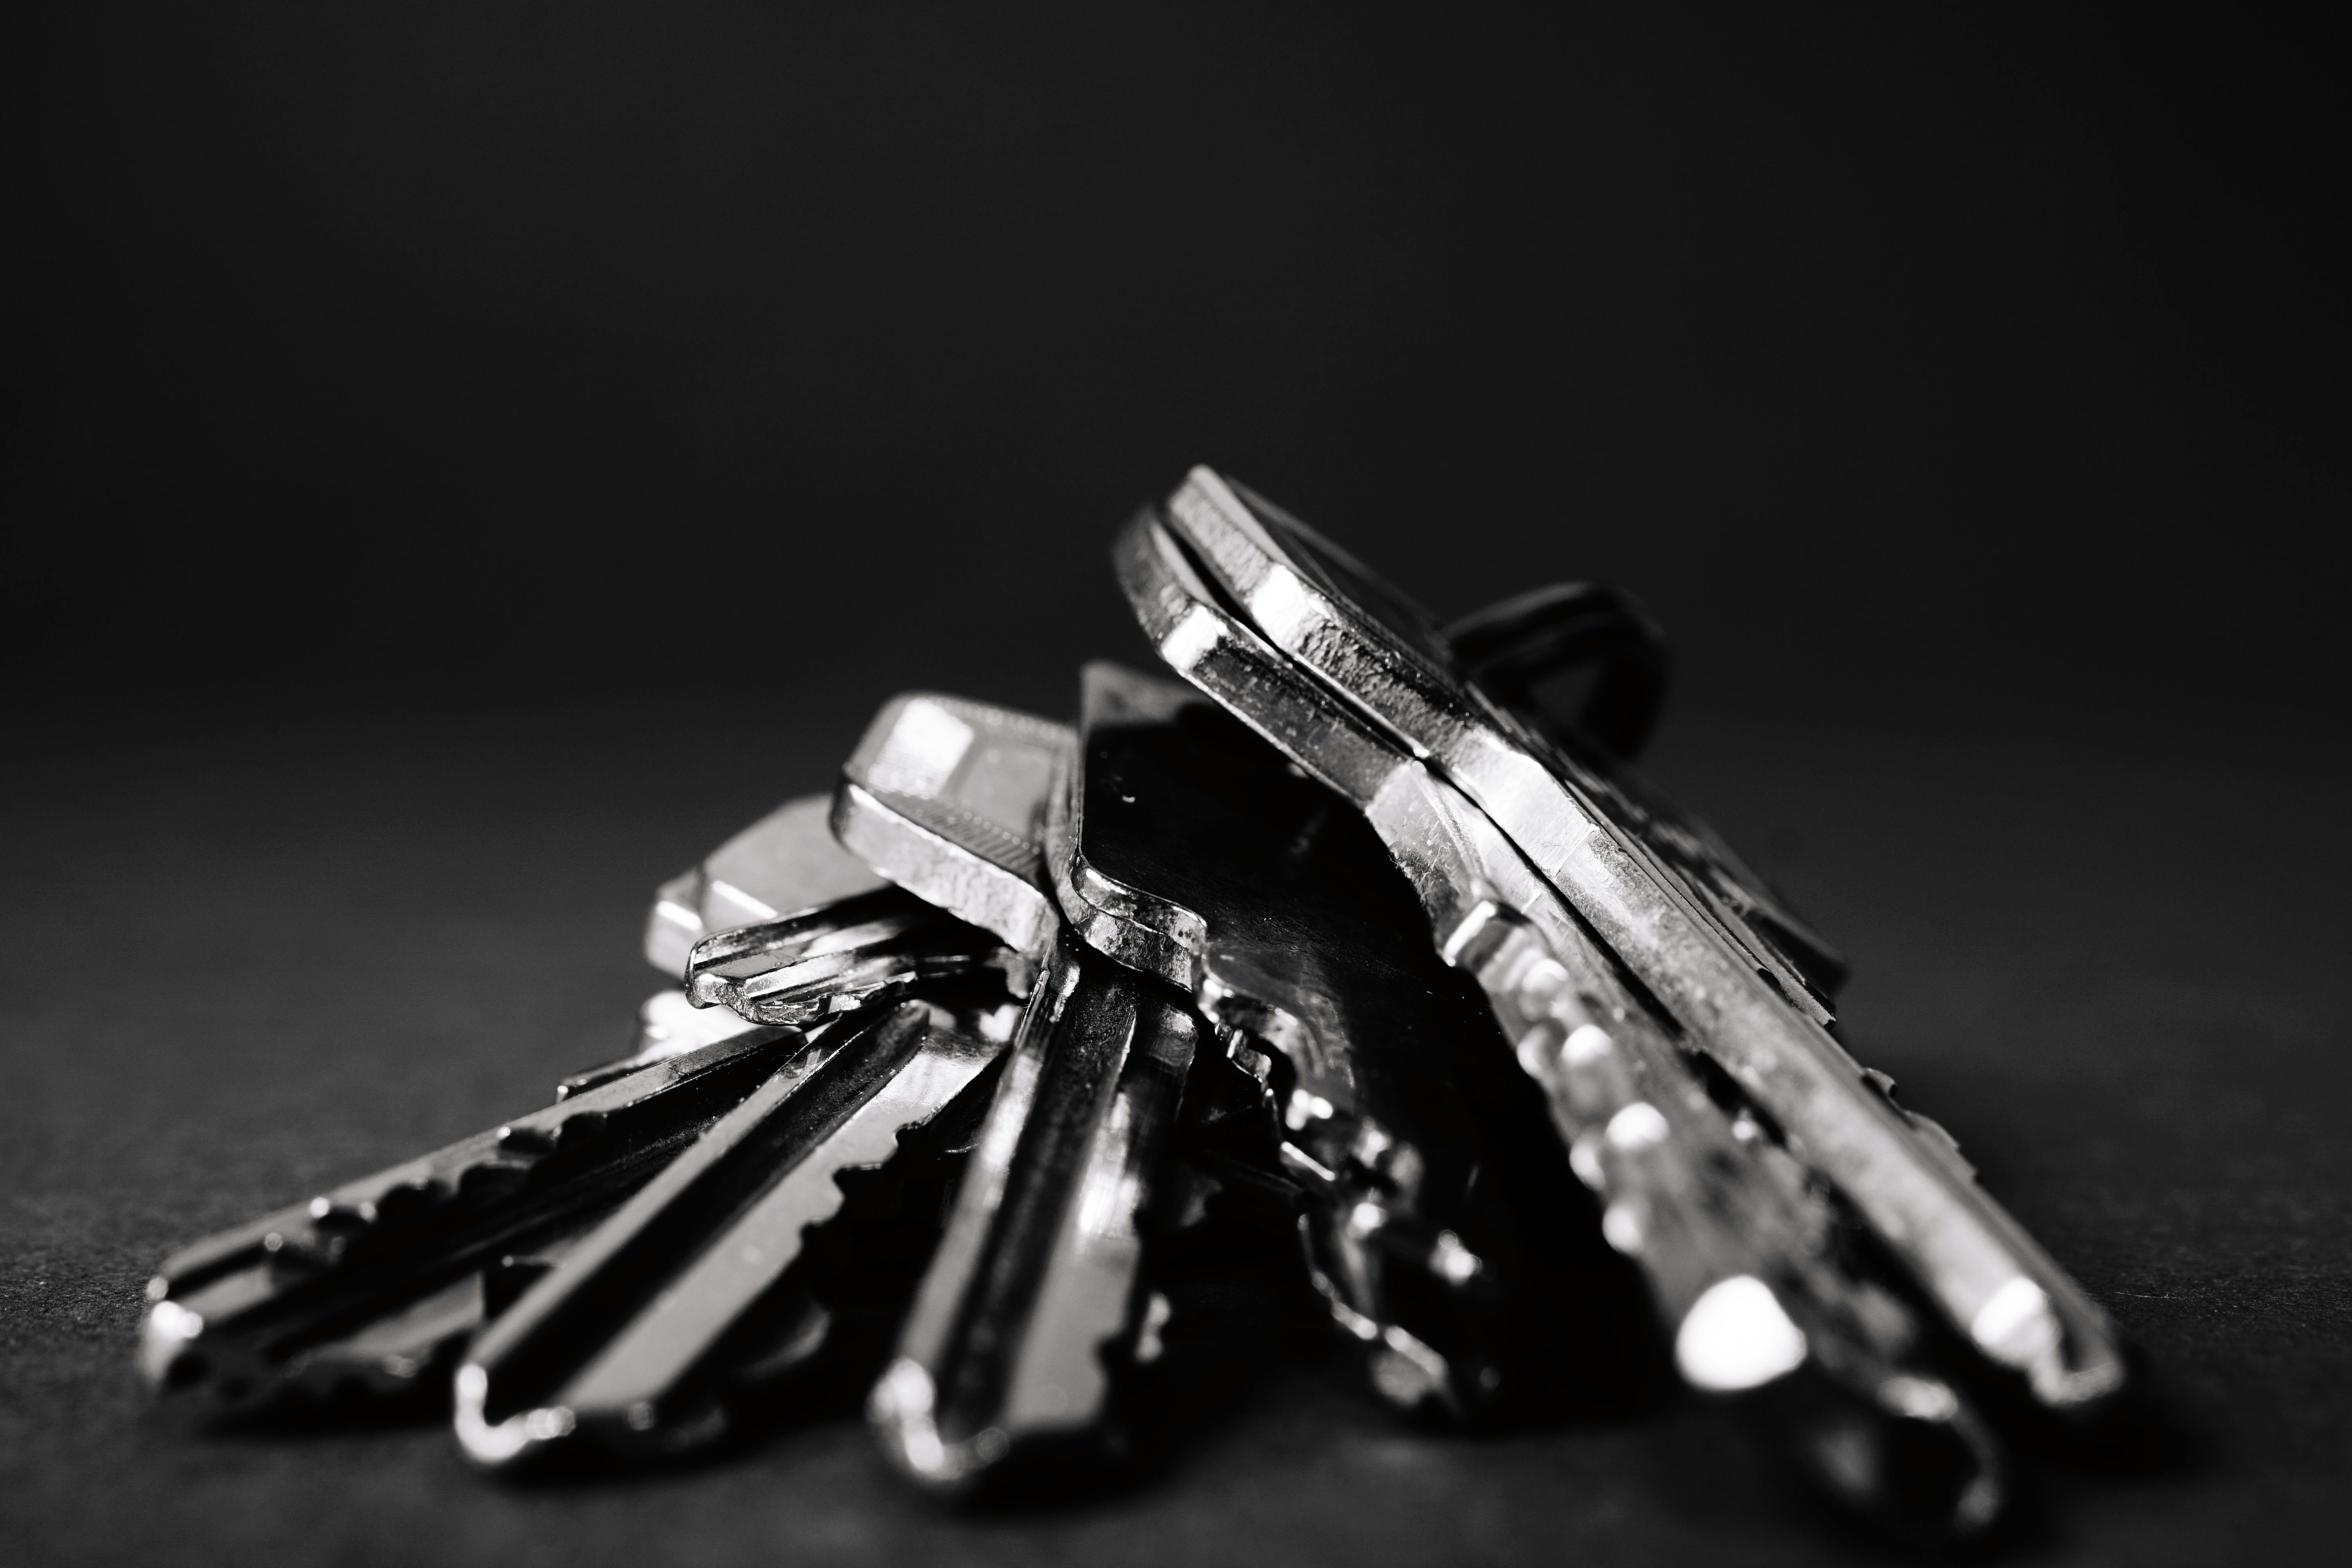 A set of keys | Source: Pexels